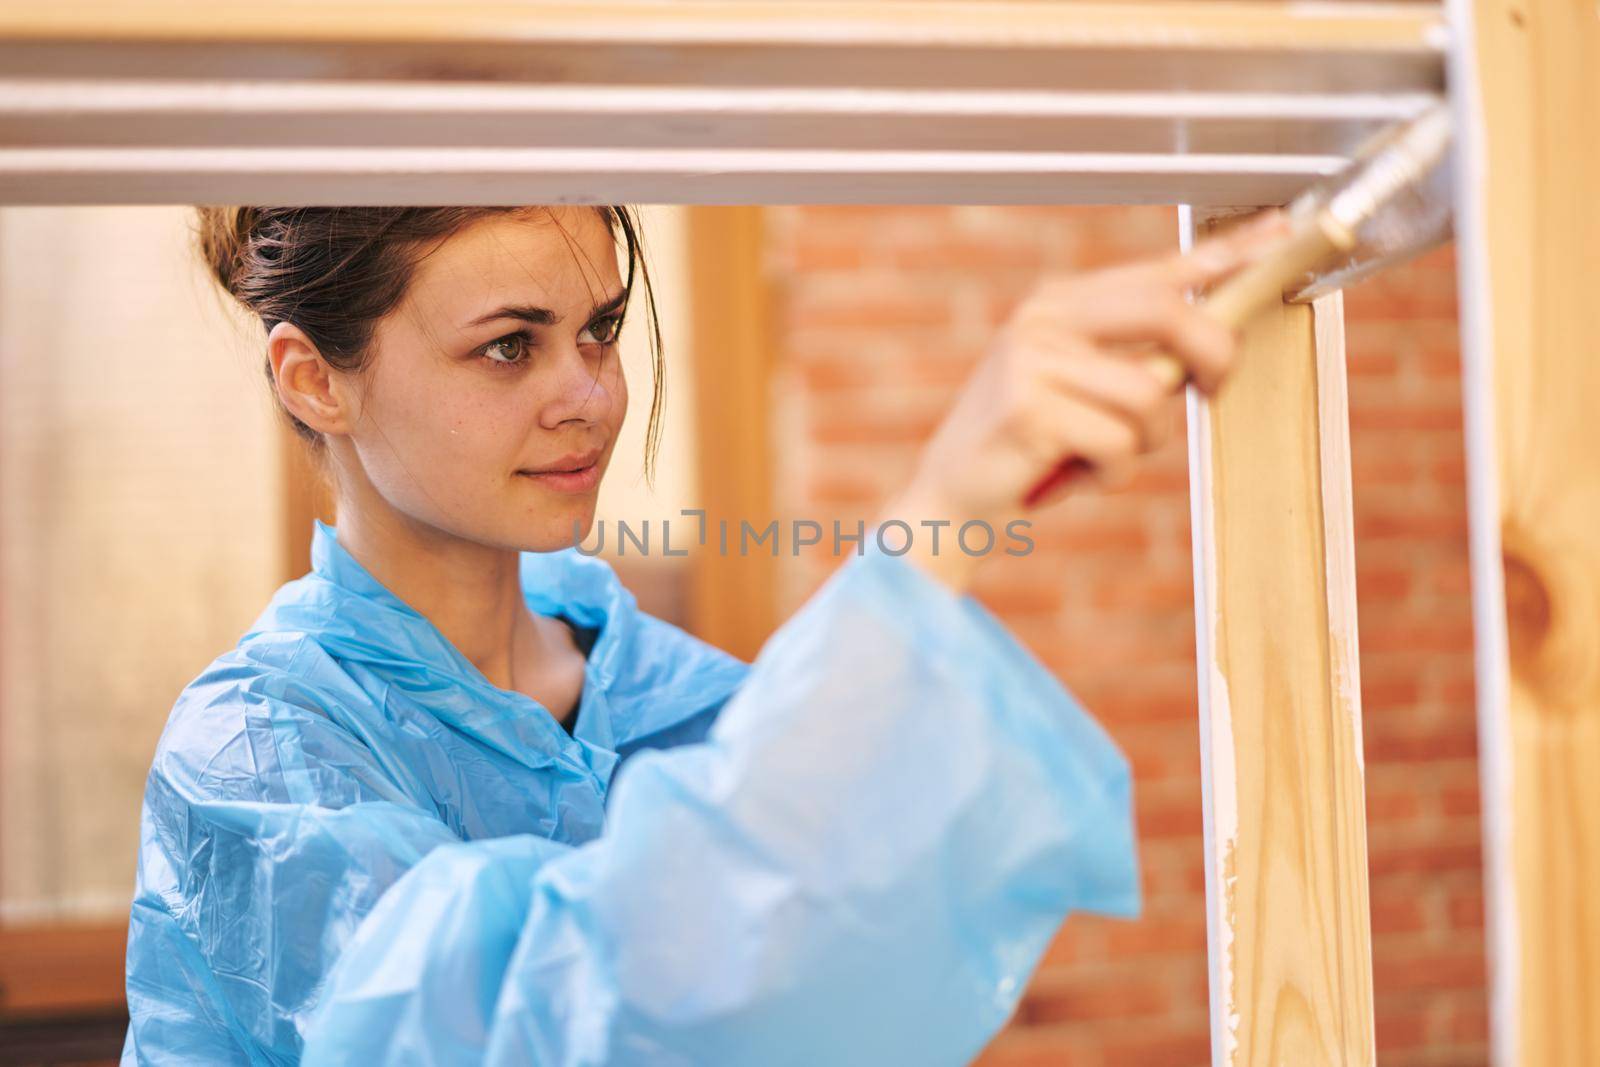 women paint wooden structures brush painter decoration. High quality photo